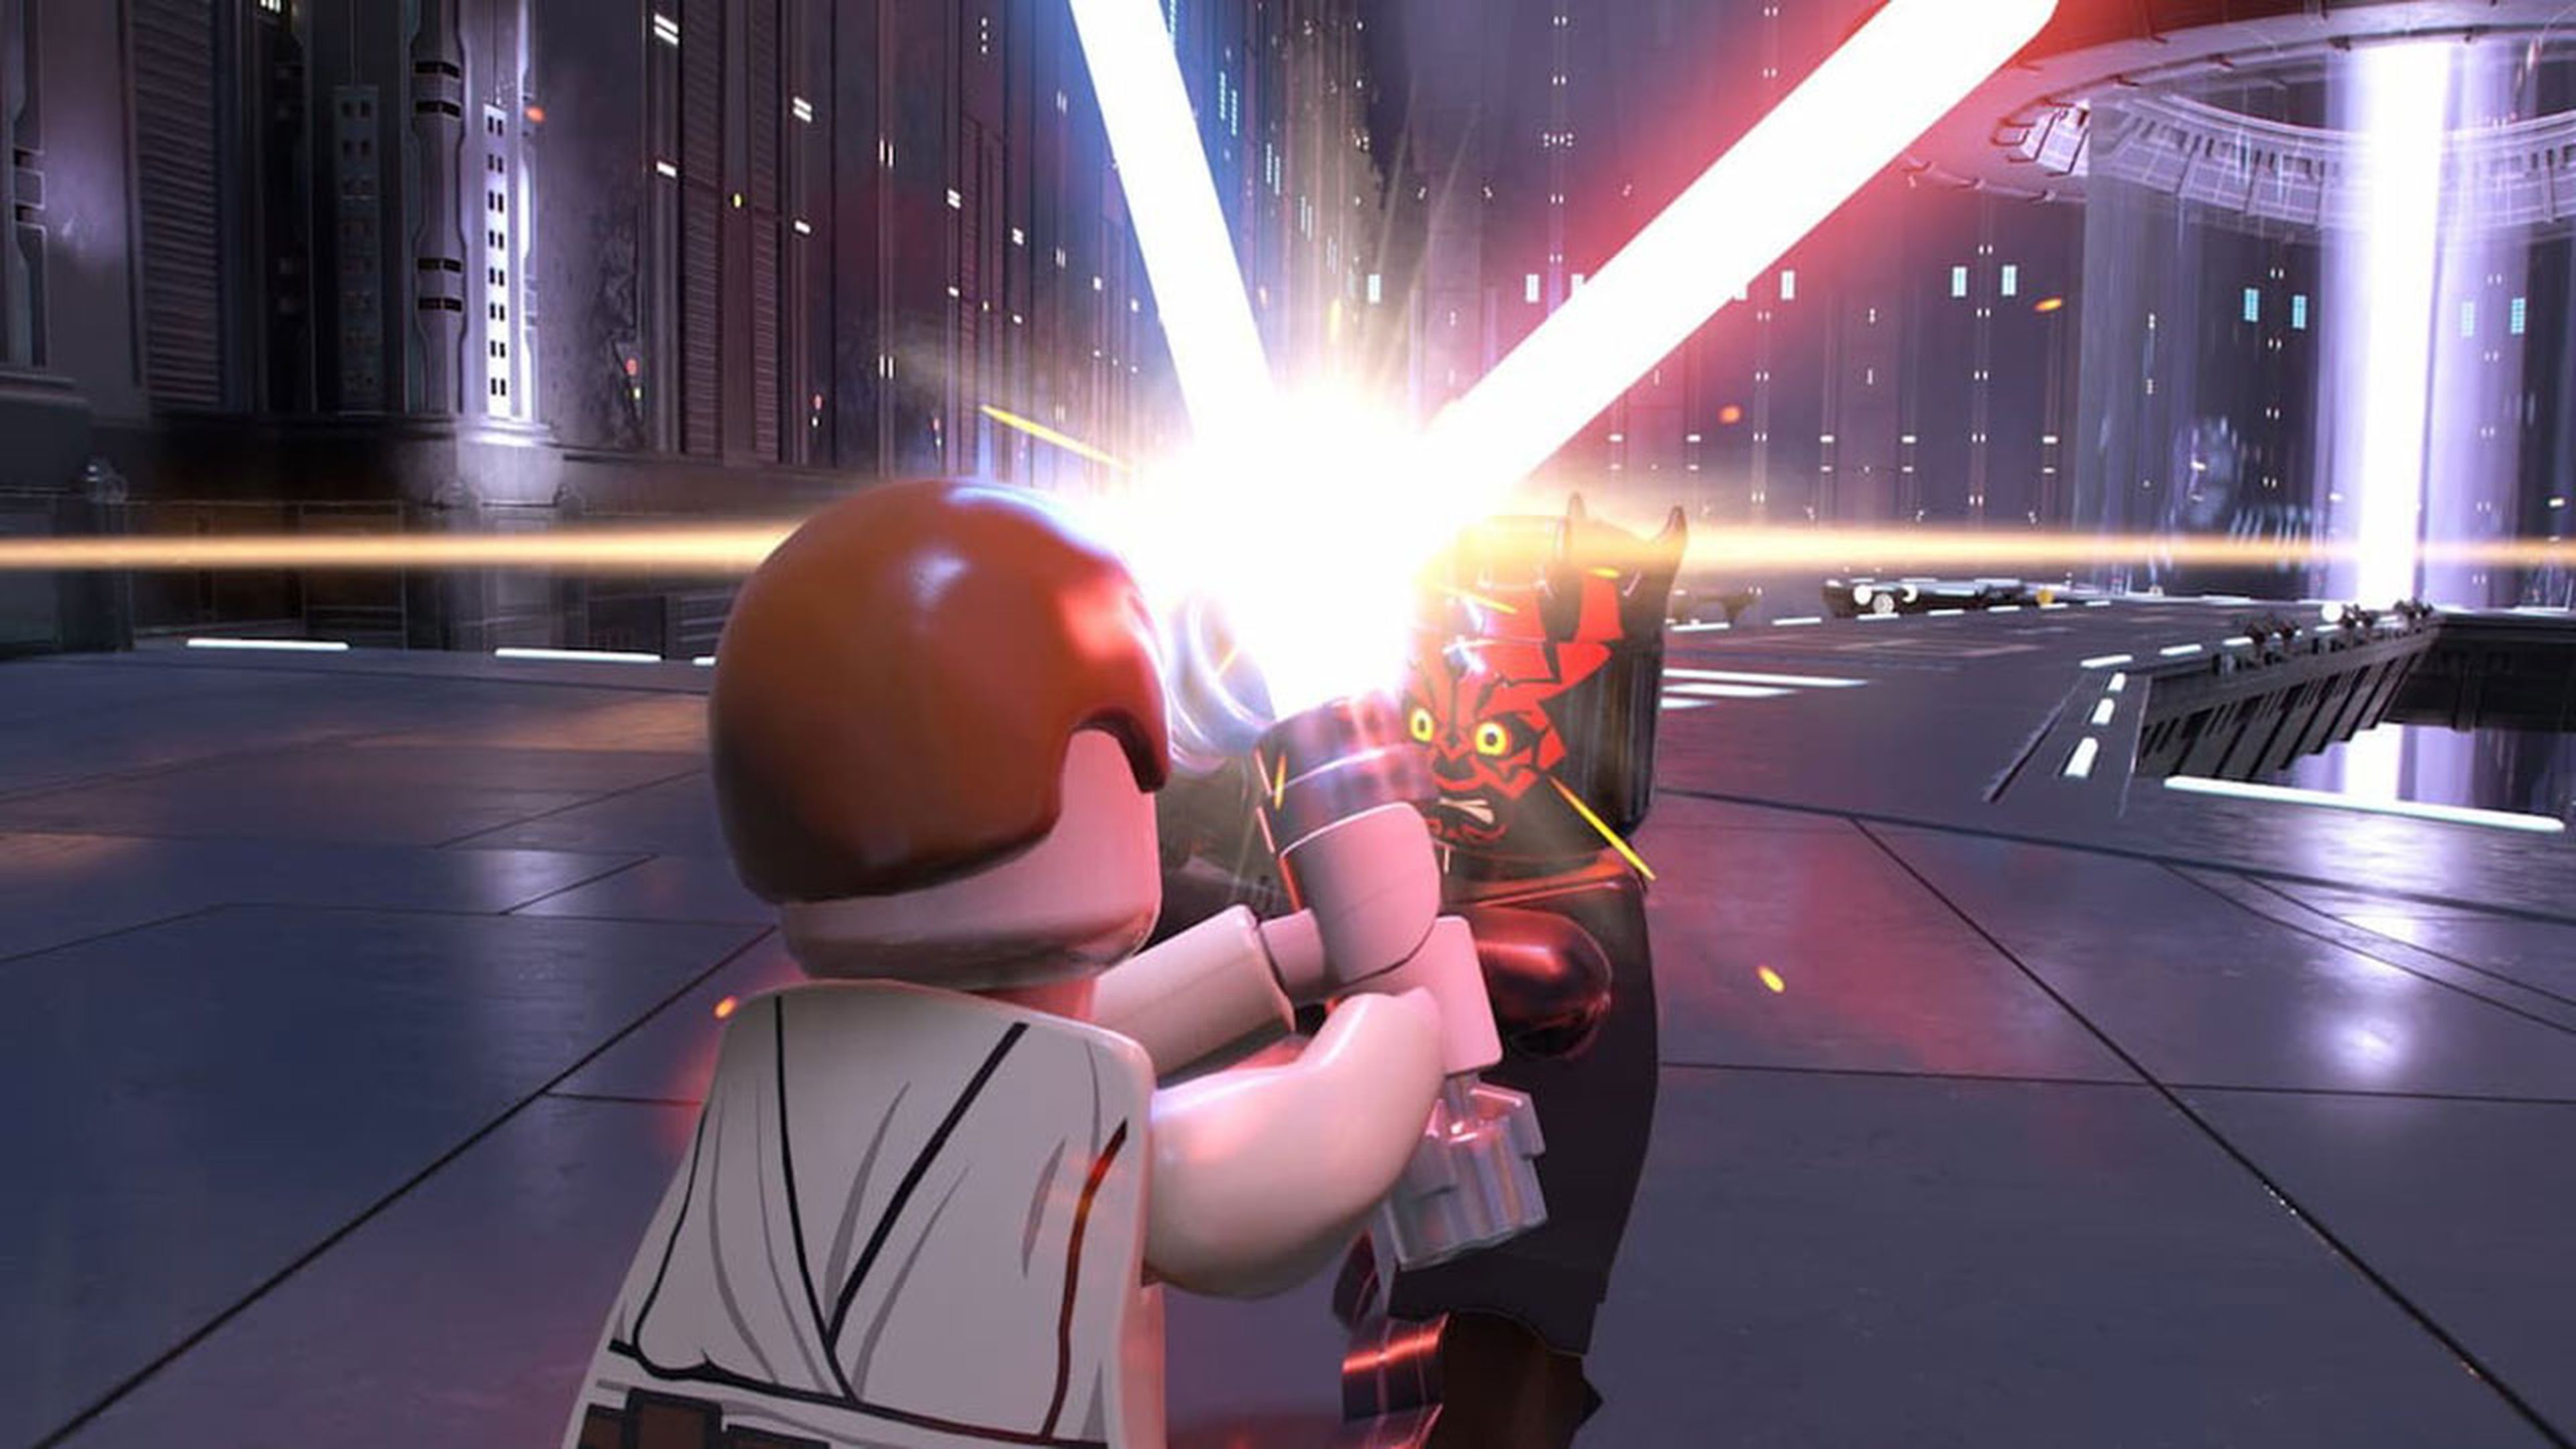 LEGO Star Wars La Saga Skywalker